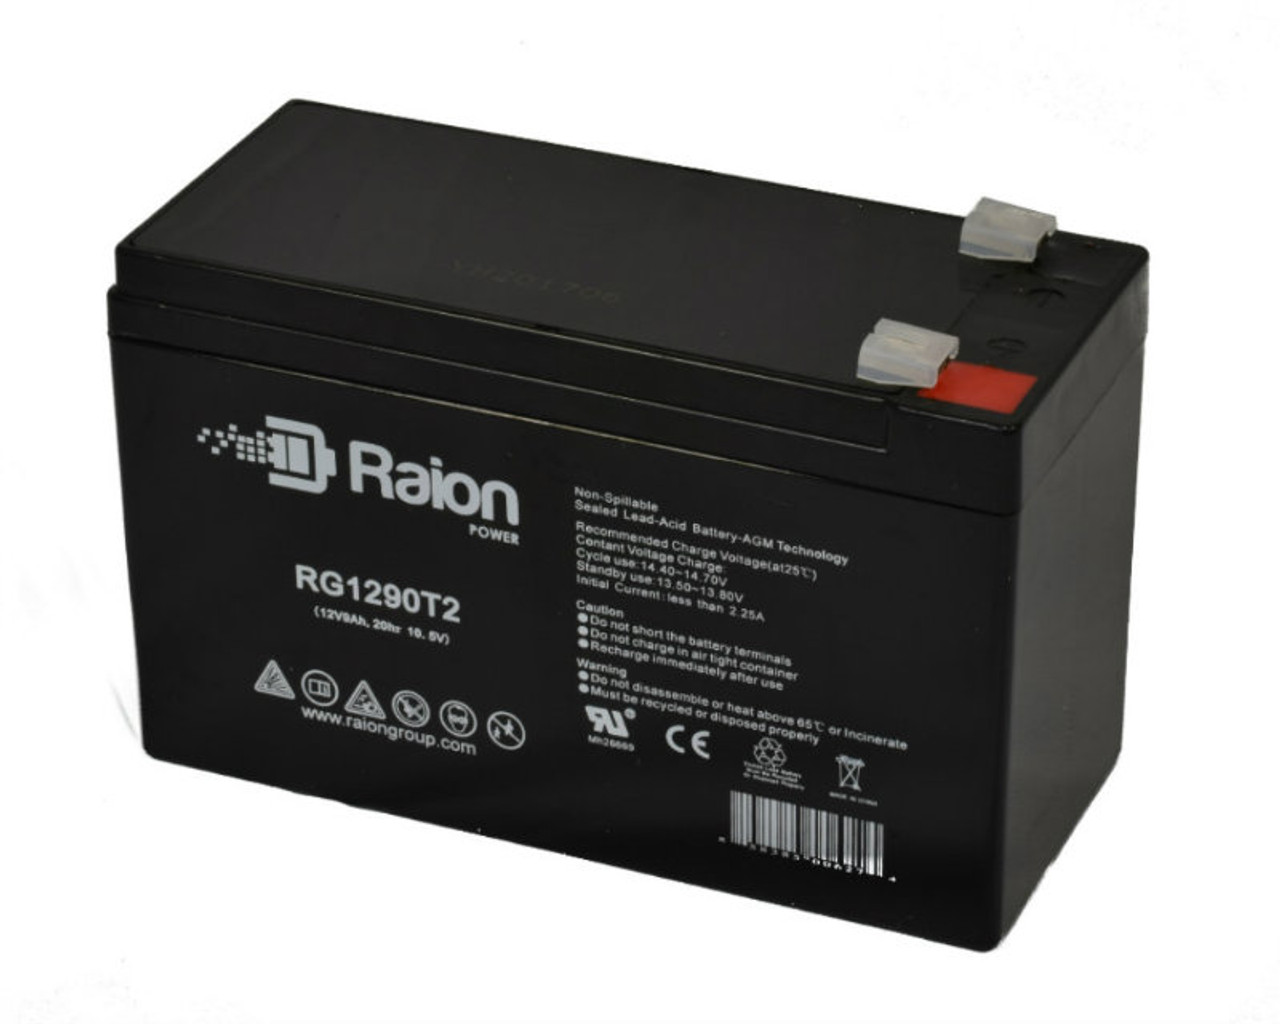 Raion Power RG1290T2 12V 9Ah AGM Battery for NERBO NBC 9-12